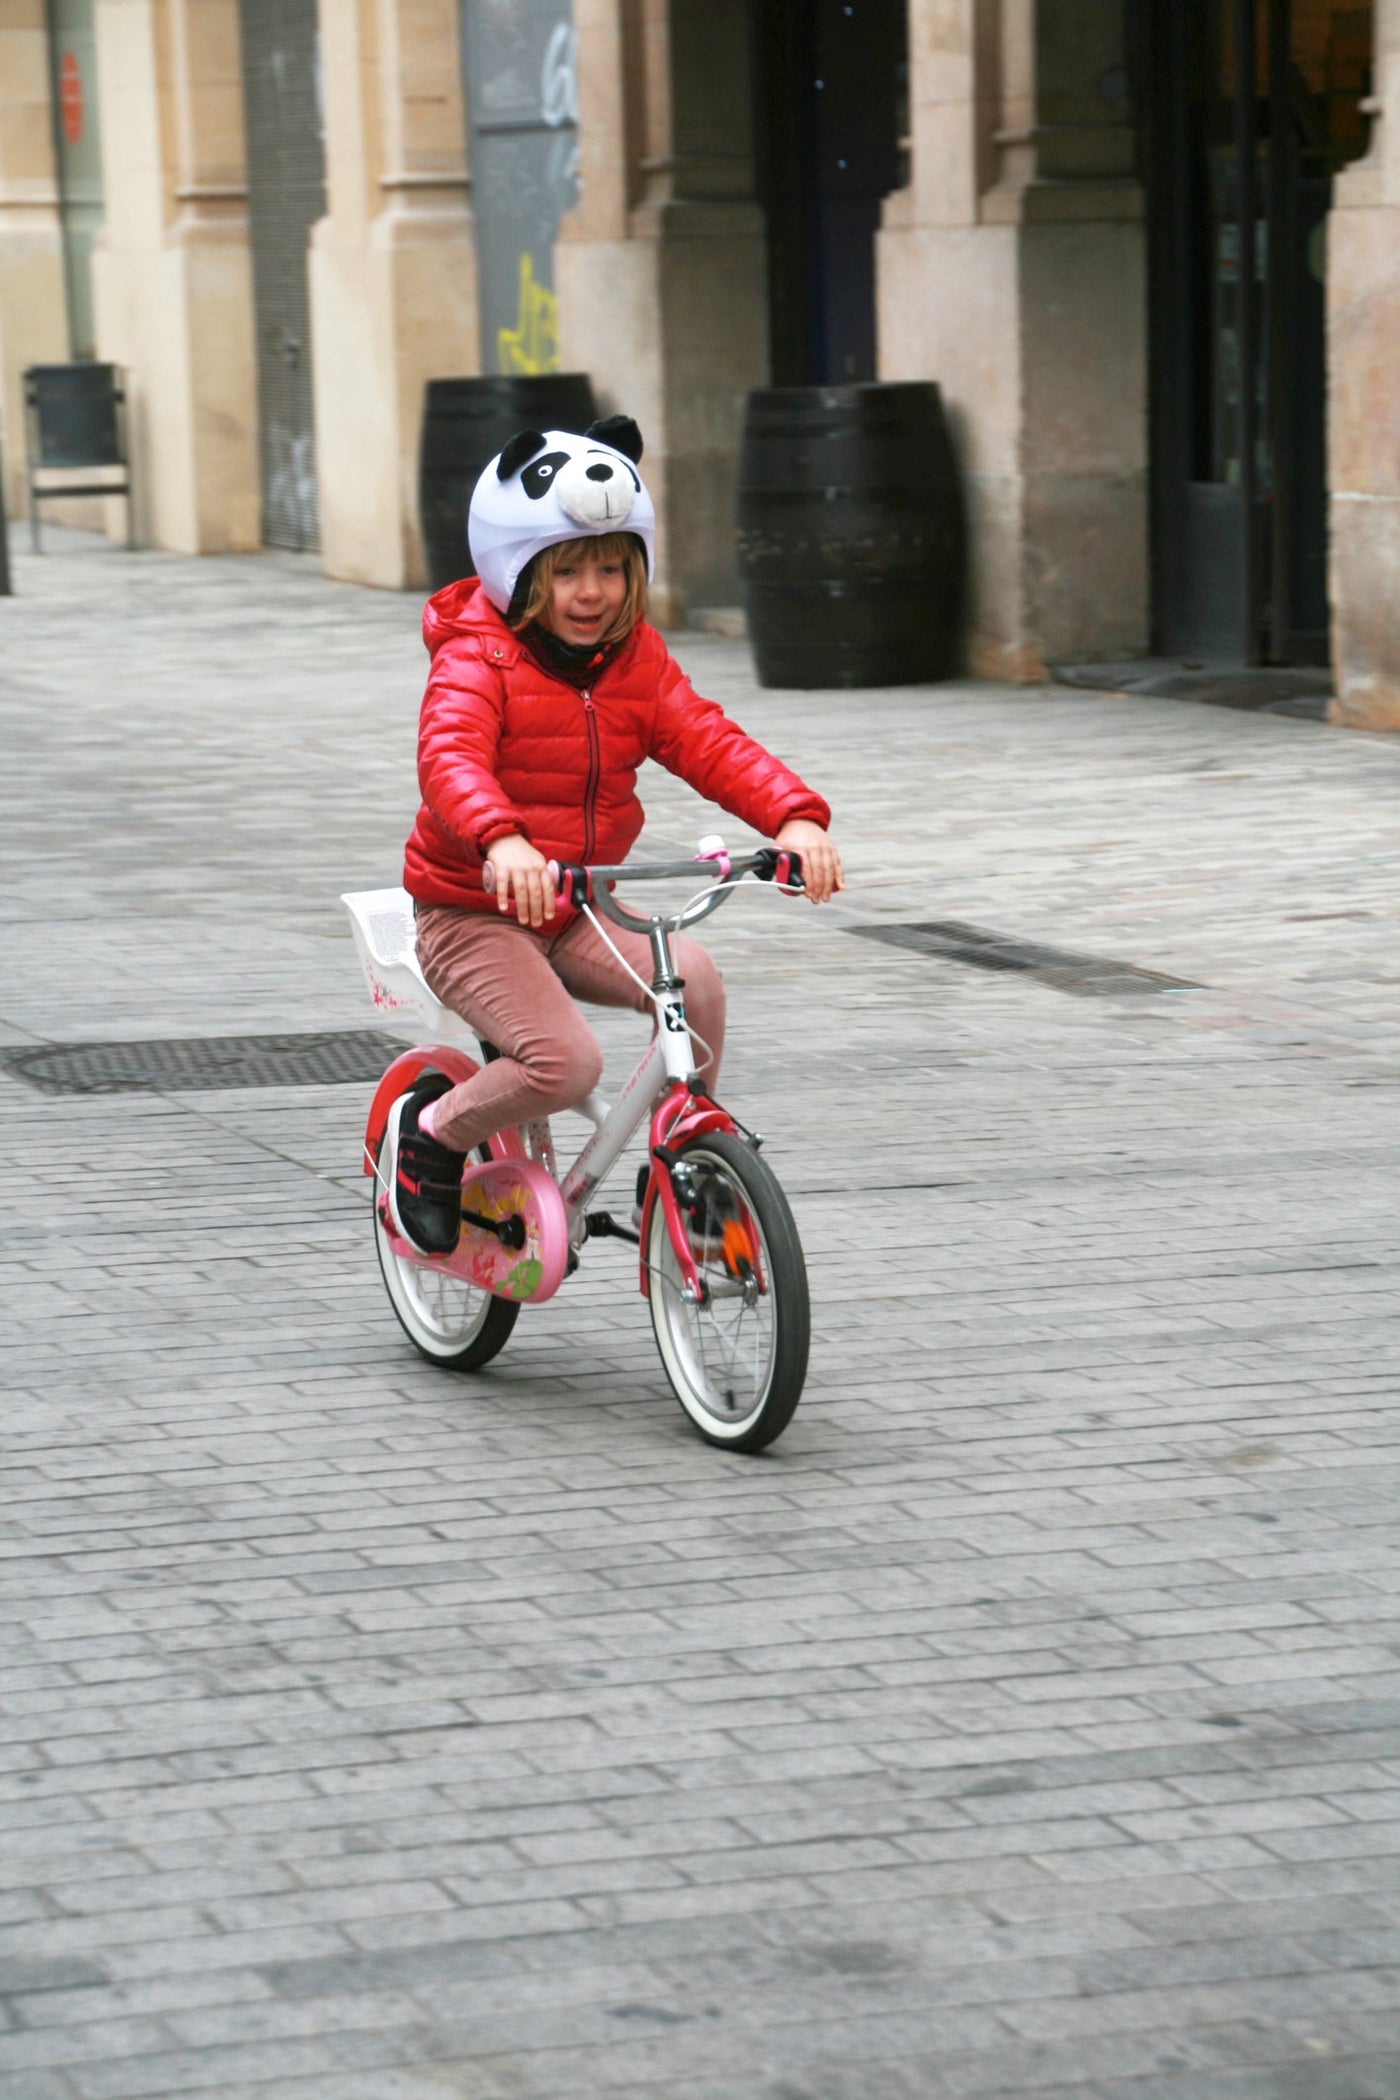 Coolcasc Animals Helmet Cover Panda Bear.